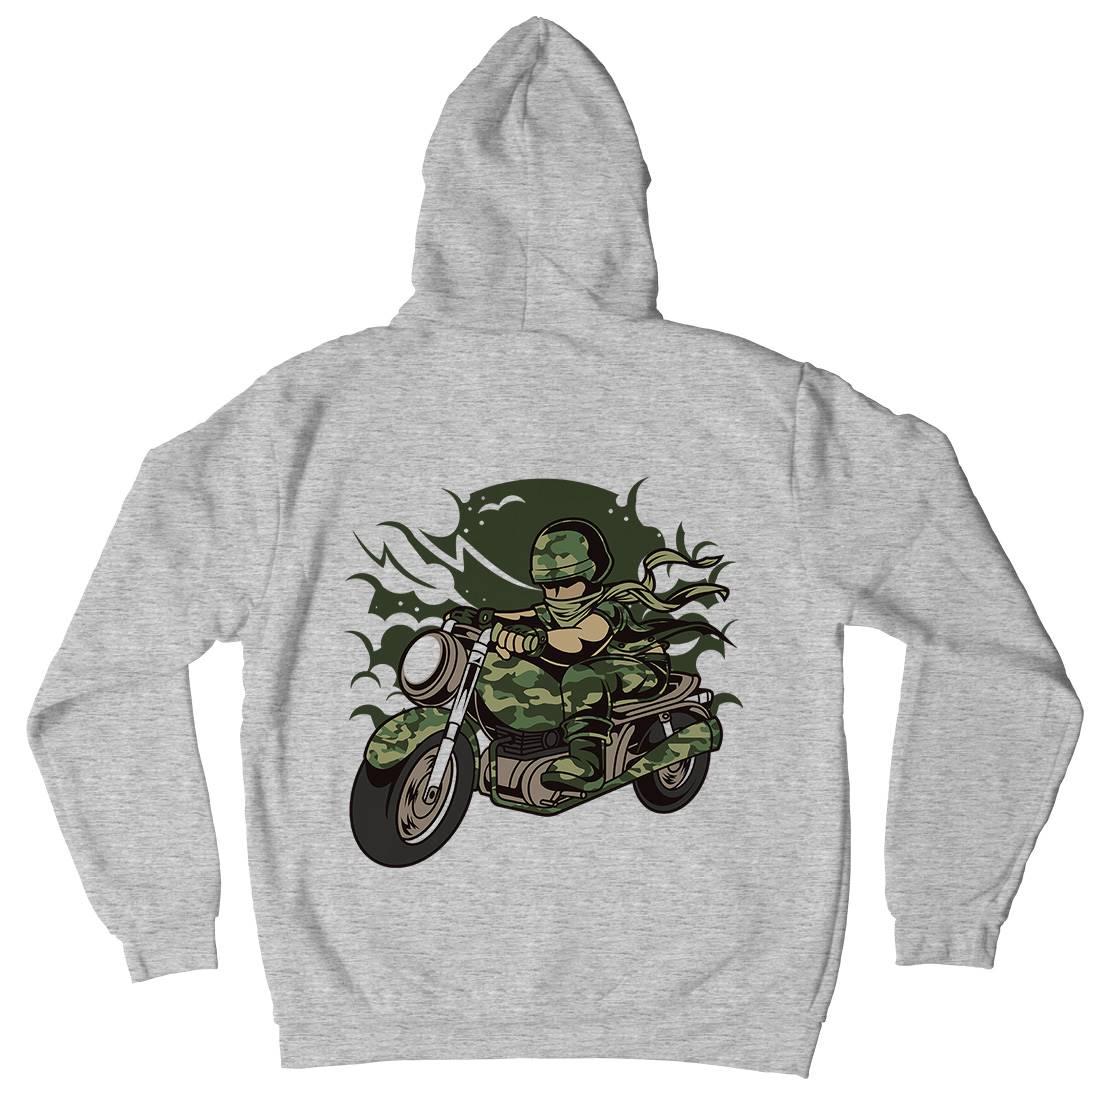 Motorcycle Ride Mens Hoodie With Pocket Army C306